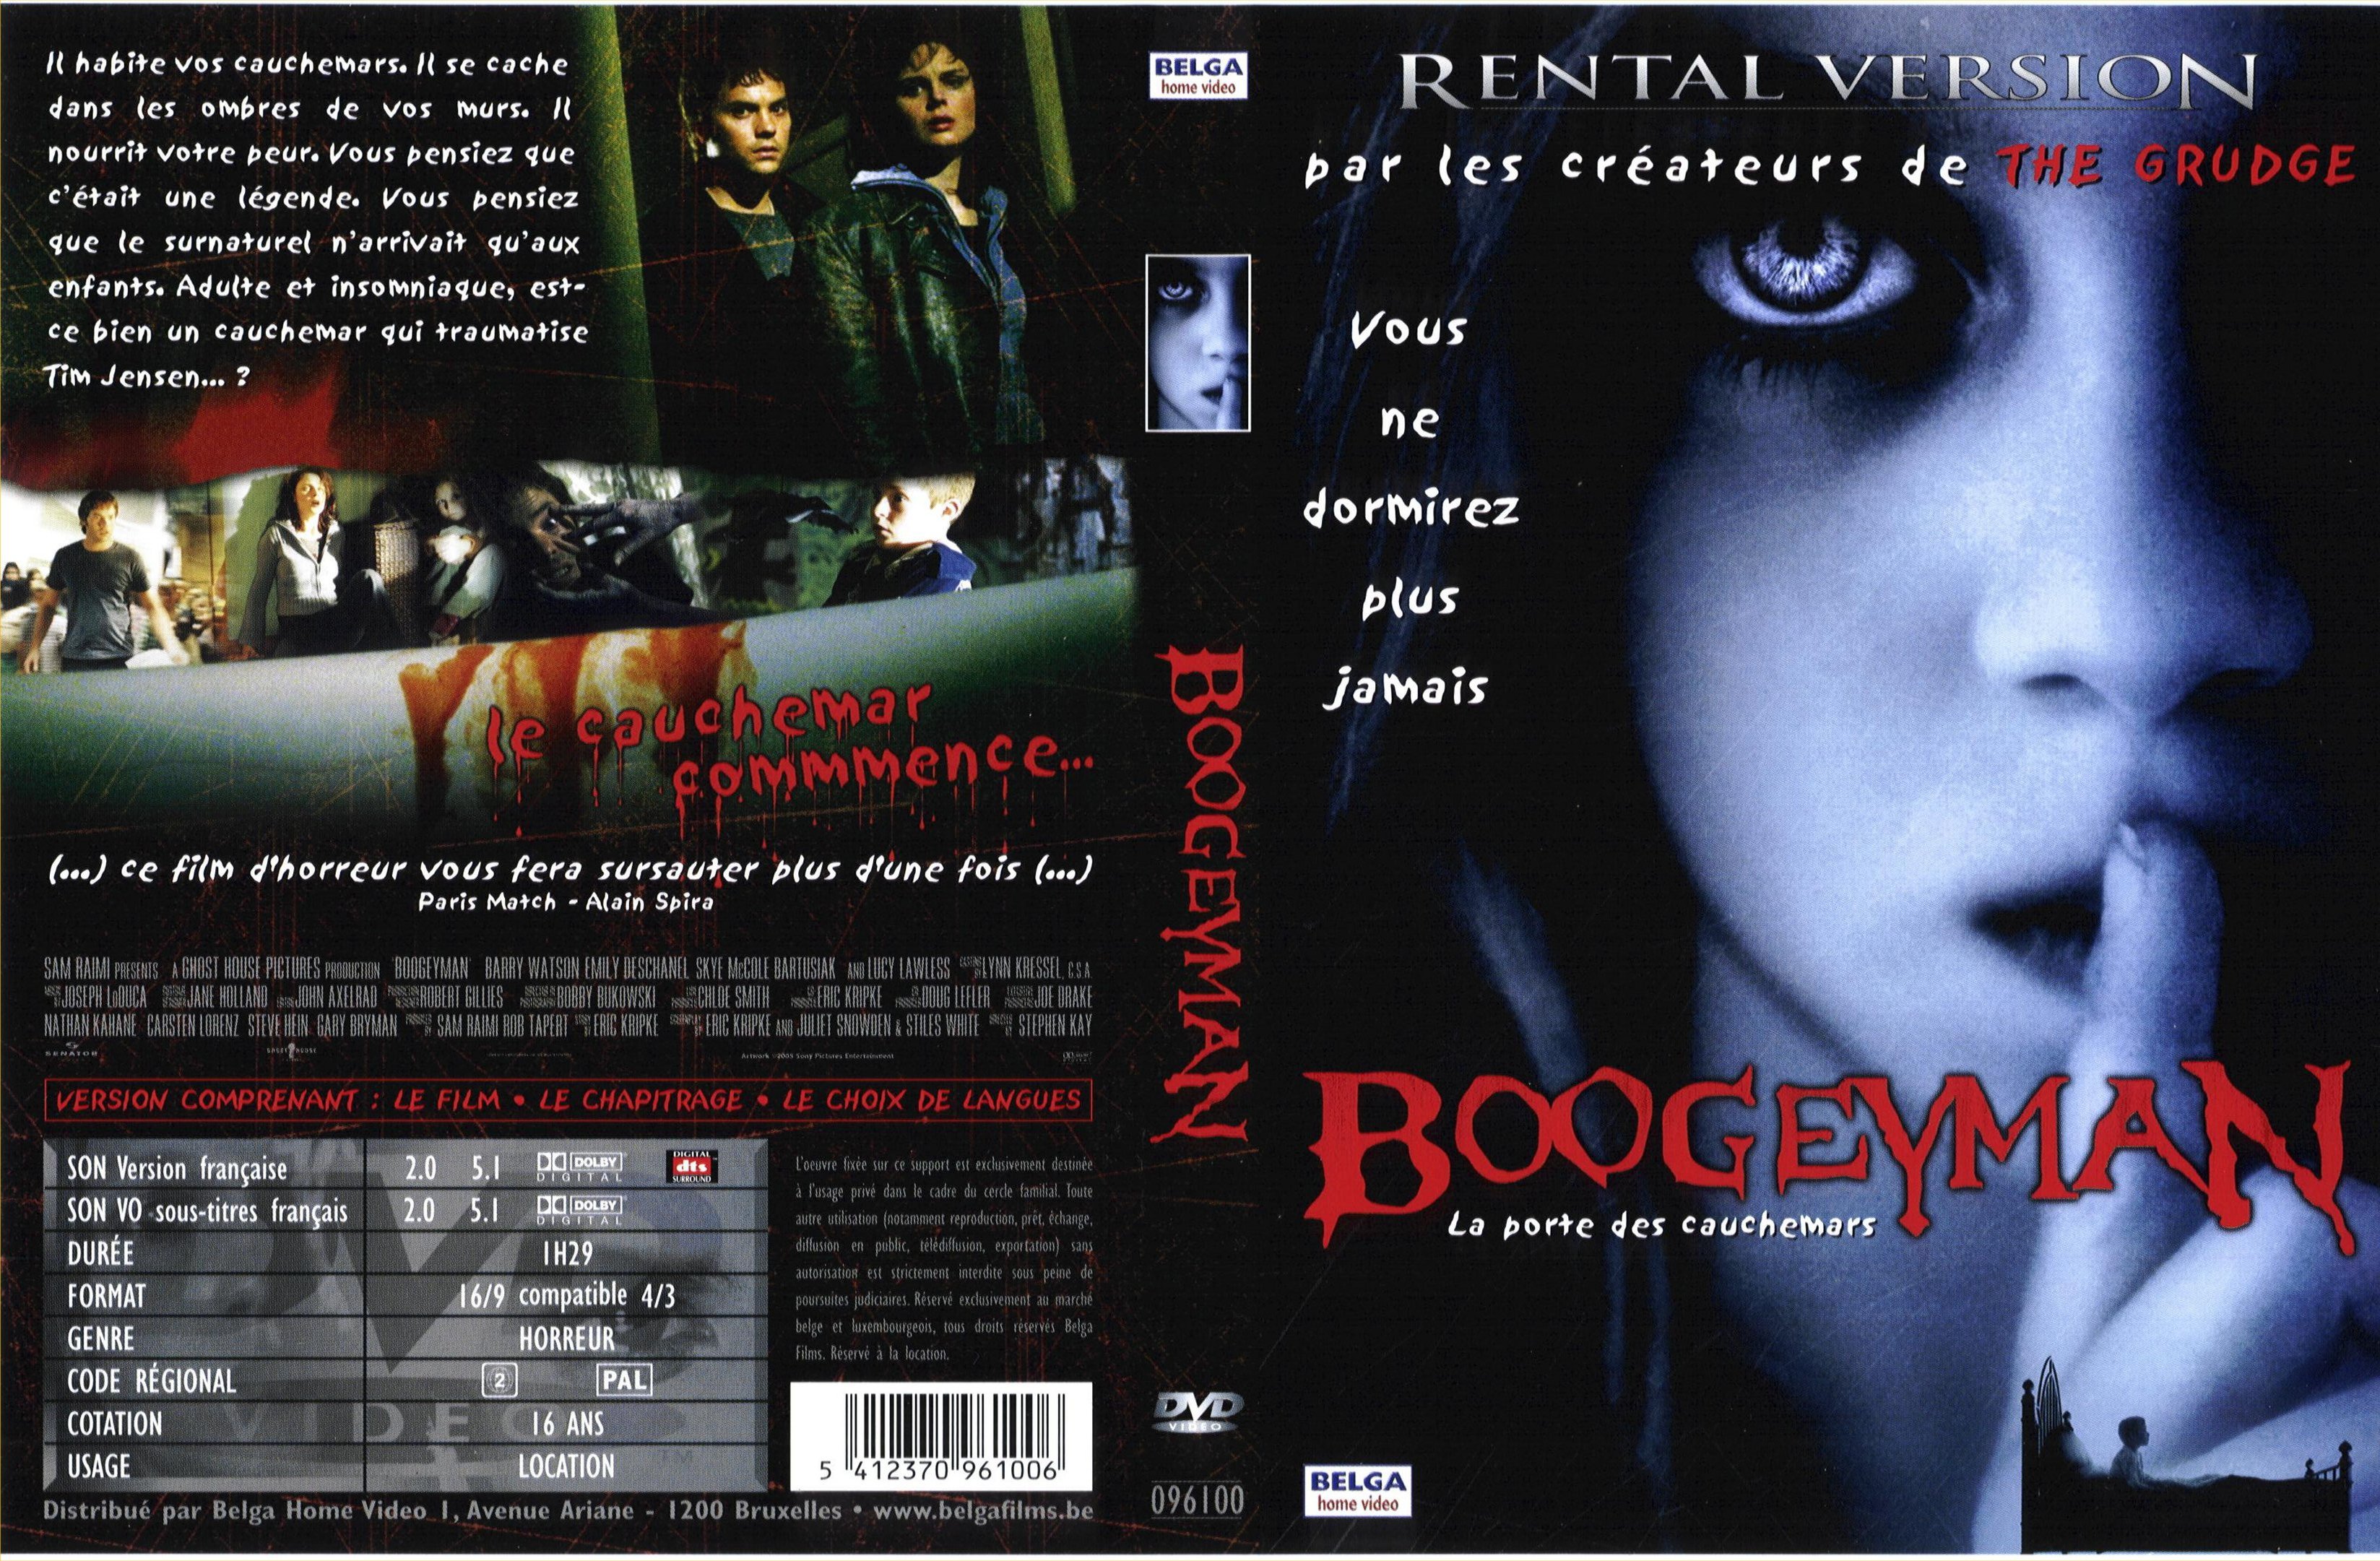 Jaquette DVD Boogeyman v2